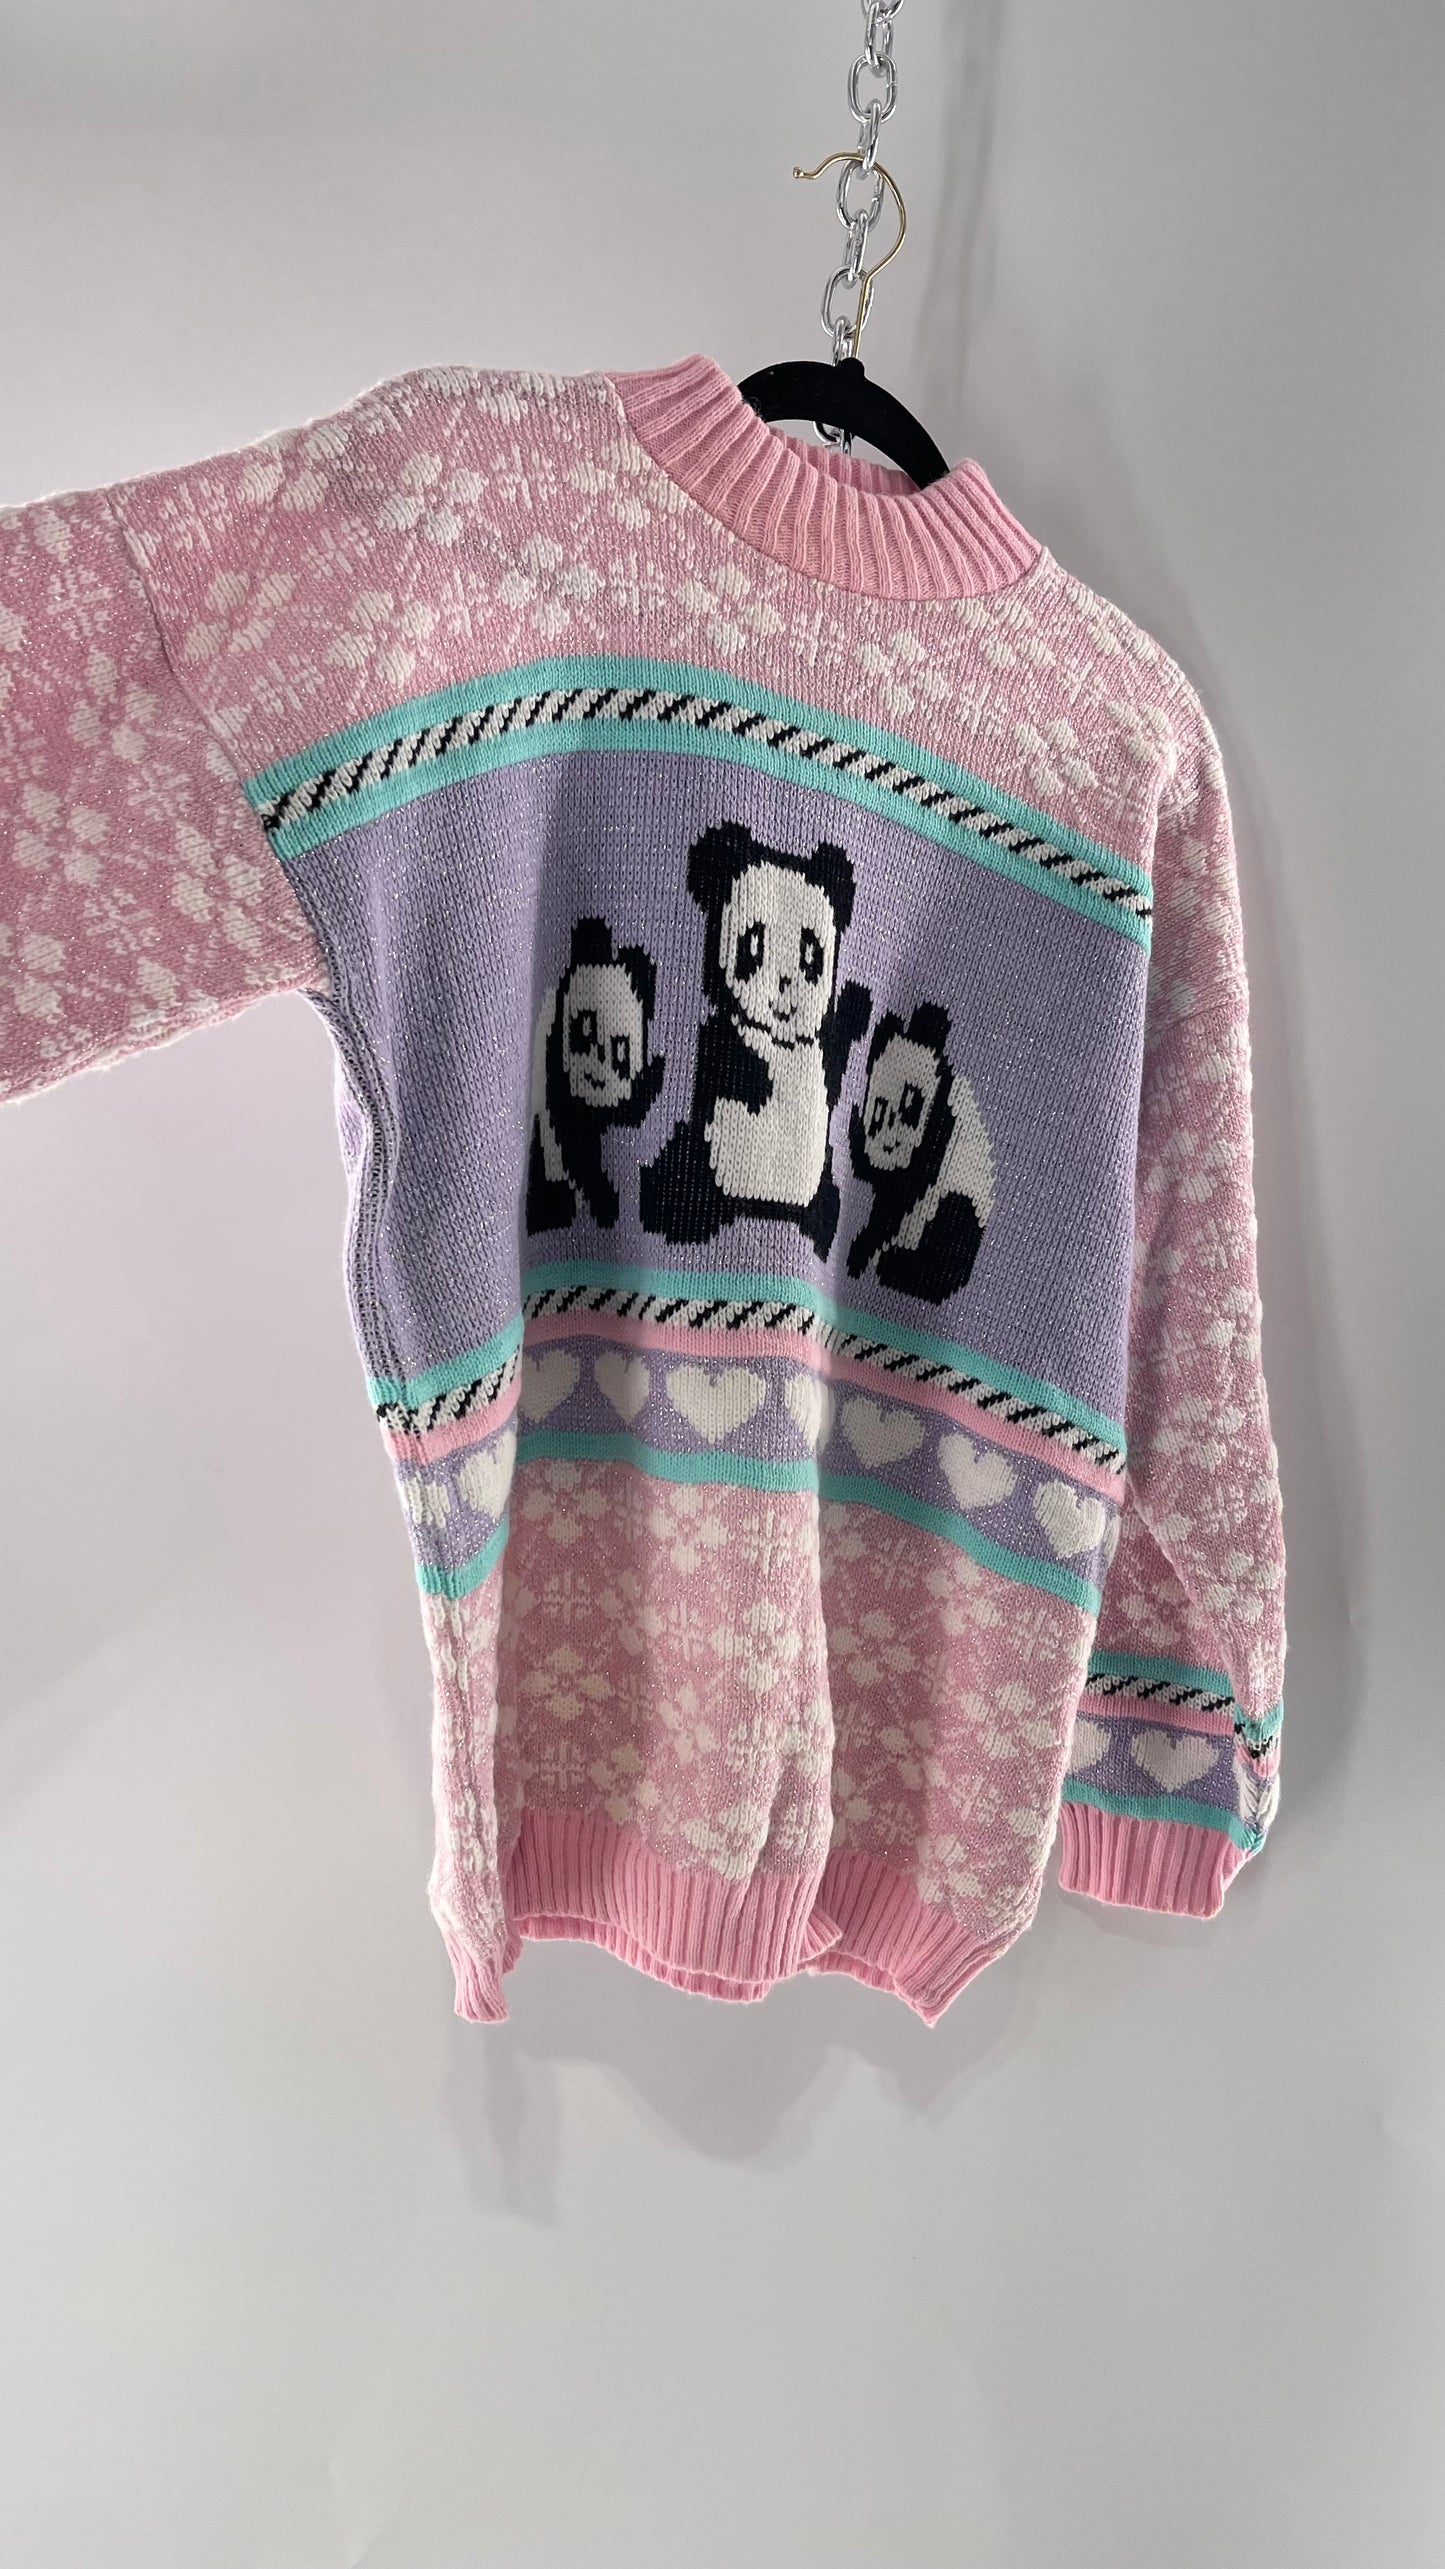 RARE 80s Vintage Adele Pastel Pink, Purple, Mint Silver Tinsel Sweater with Anime/Manga Art Style Pandas (Medium)